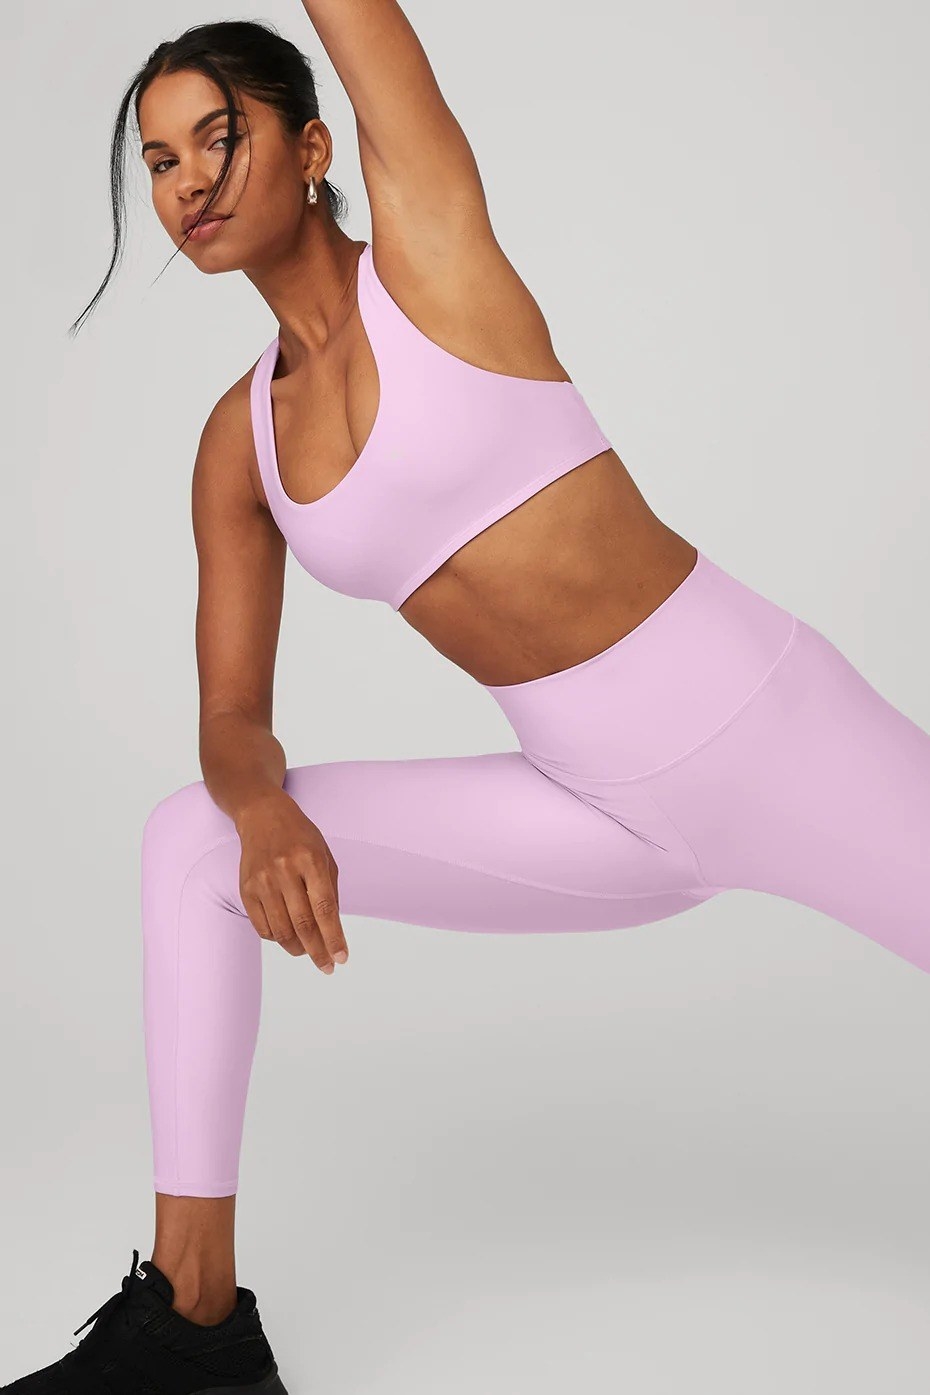 model wearing matching pink sports bra and high-rise leggings